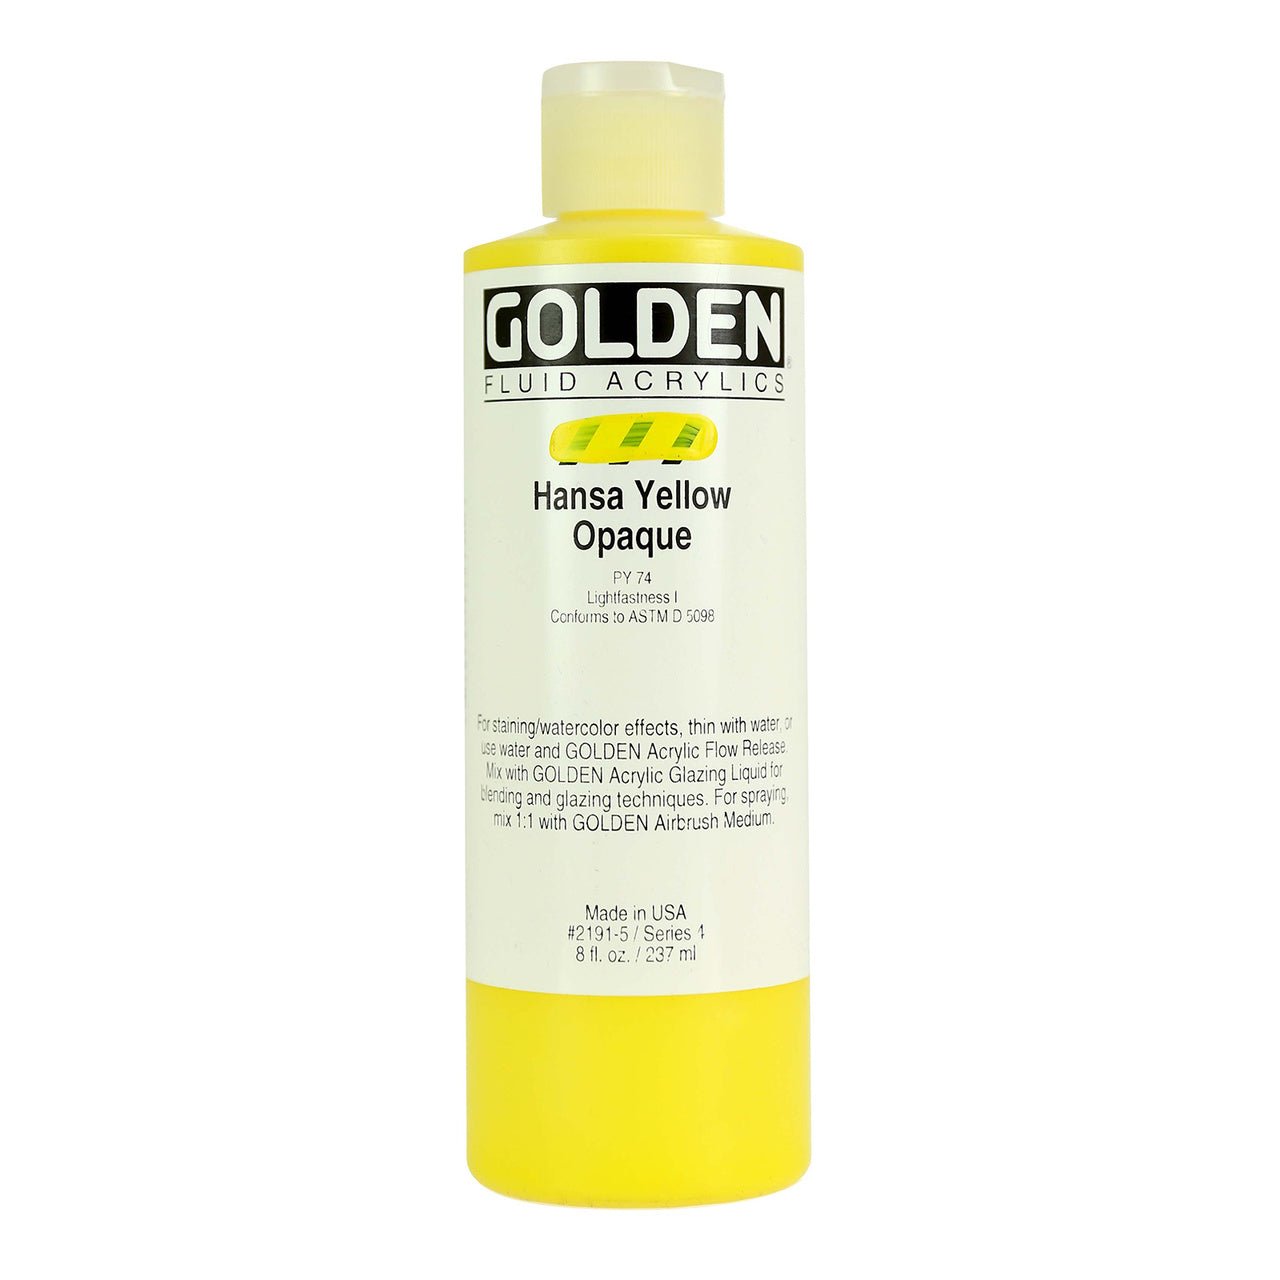 Golden Fluid Acrylic Hansa Yellow Opaque 8 oz - merriartist.com